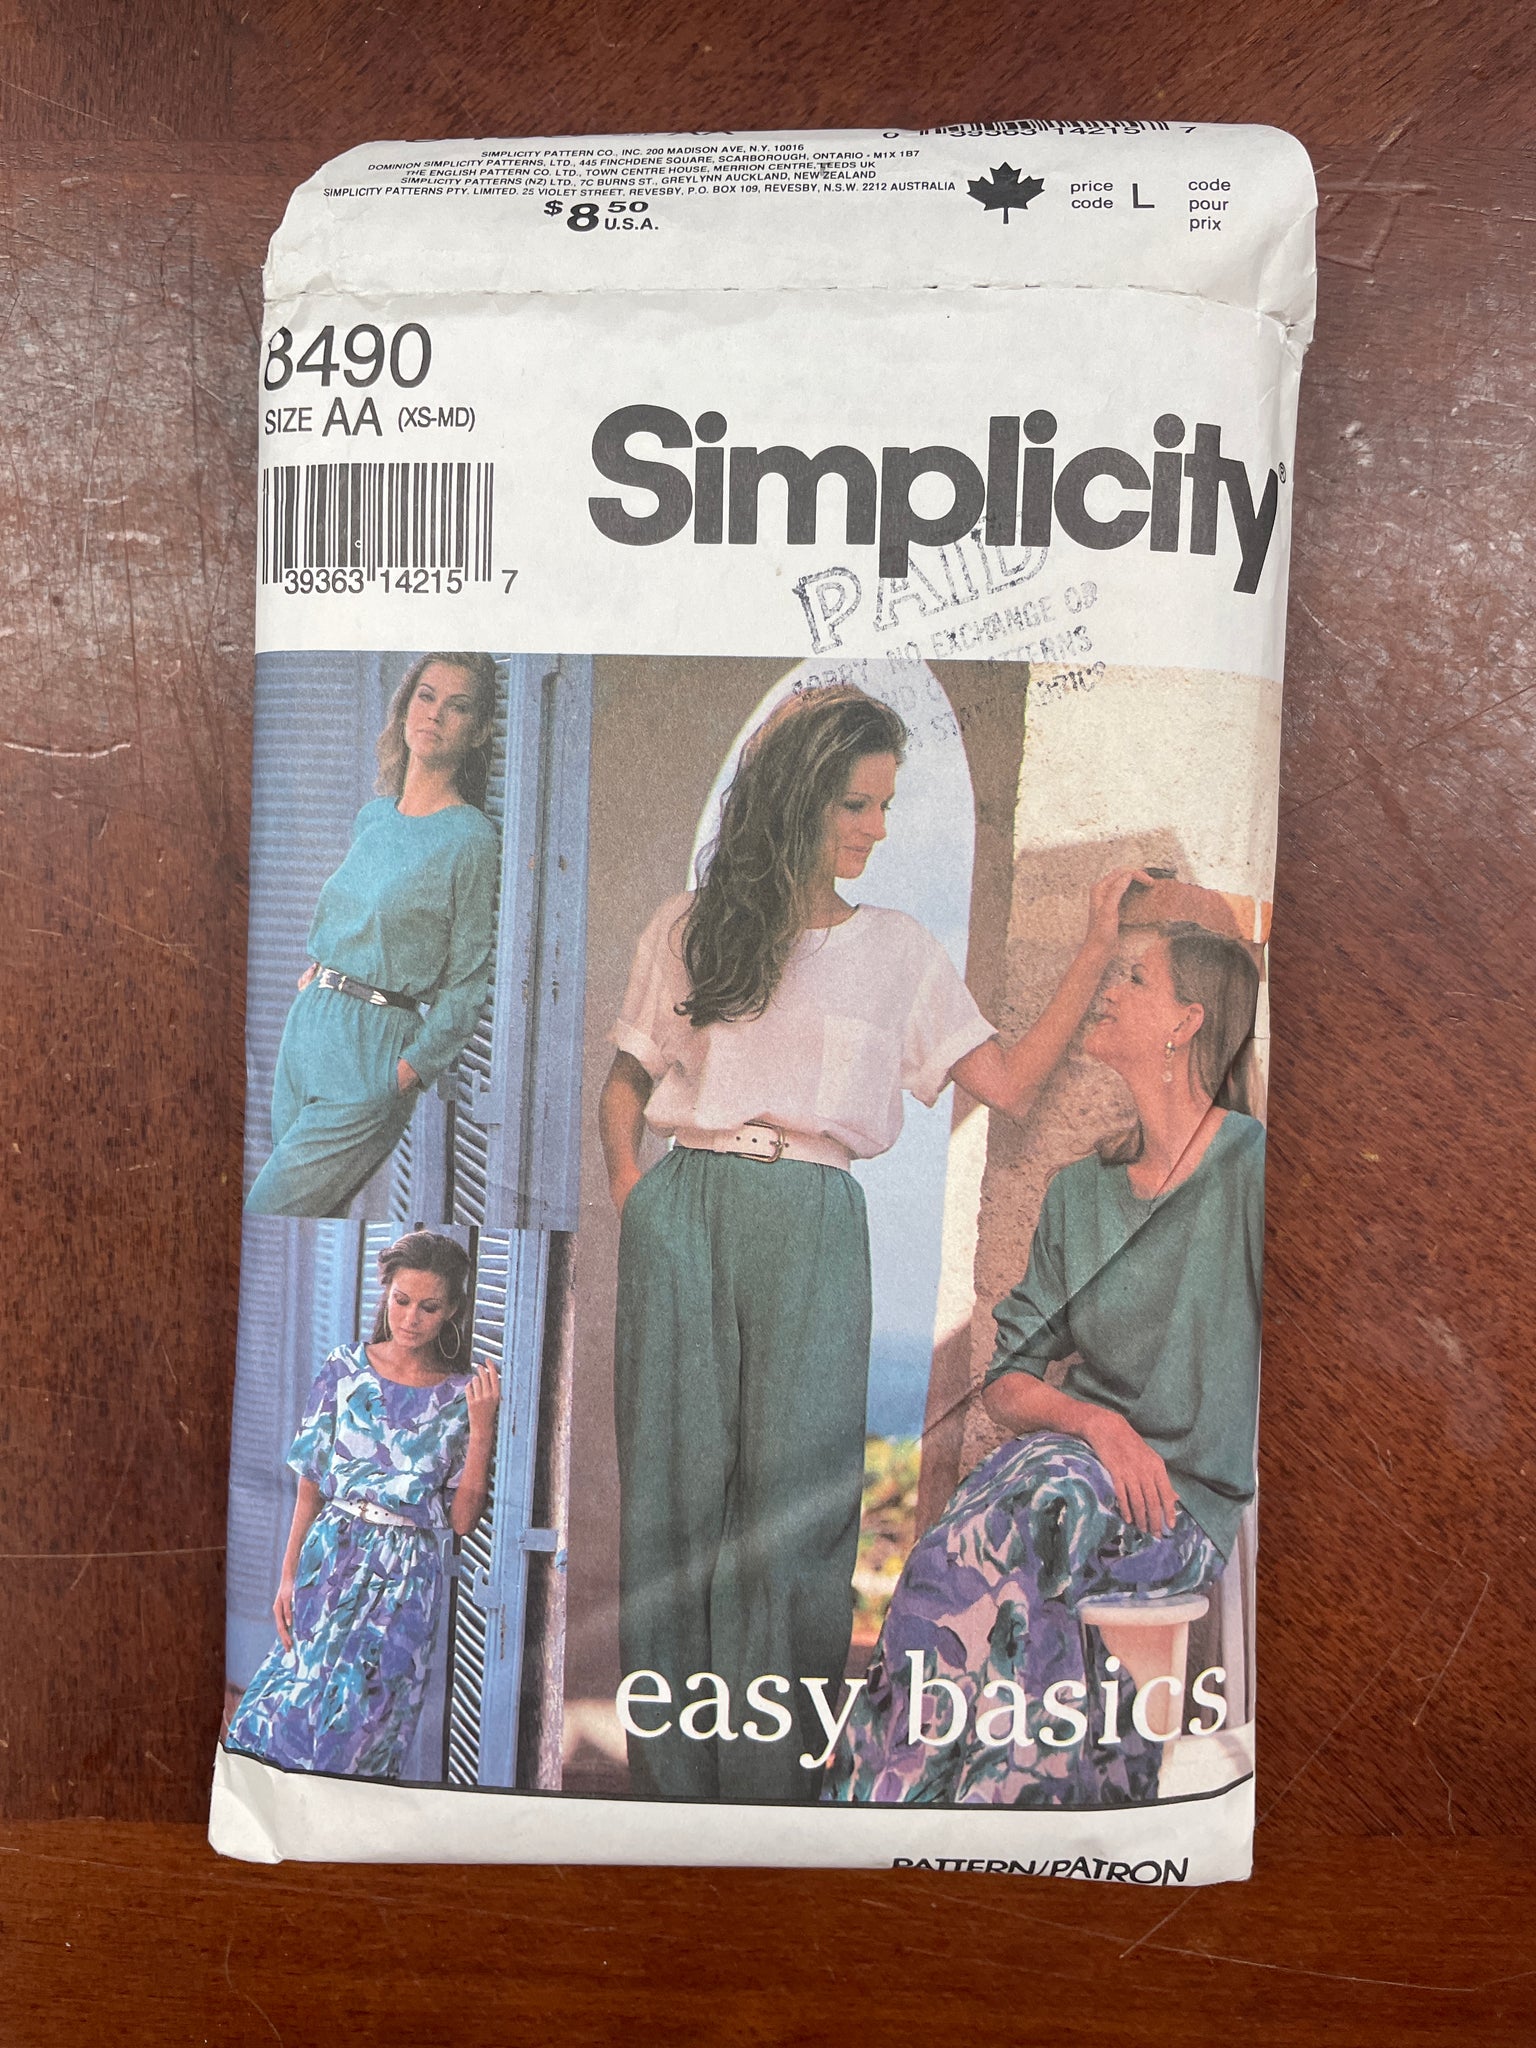 1993 Simplicity 8490 Pattern - Women's Pants, Top, Skirt